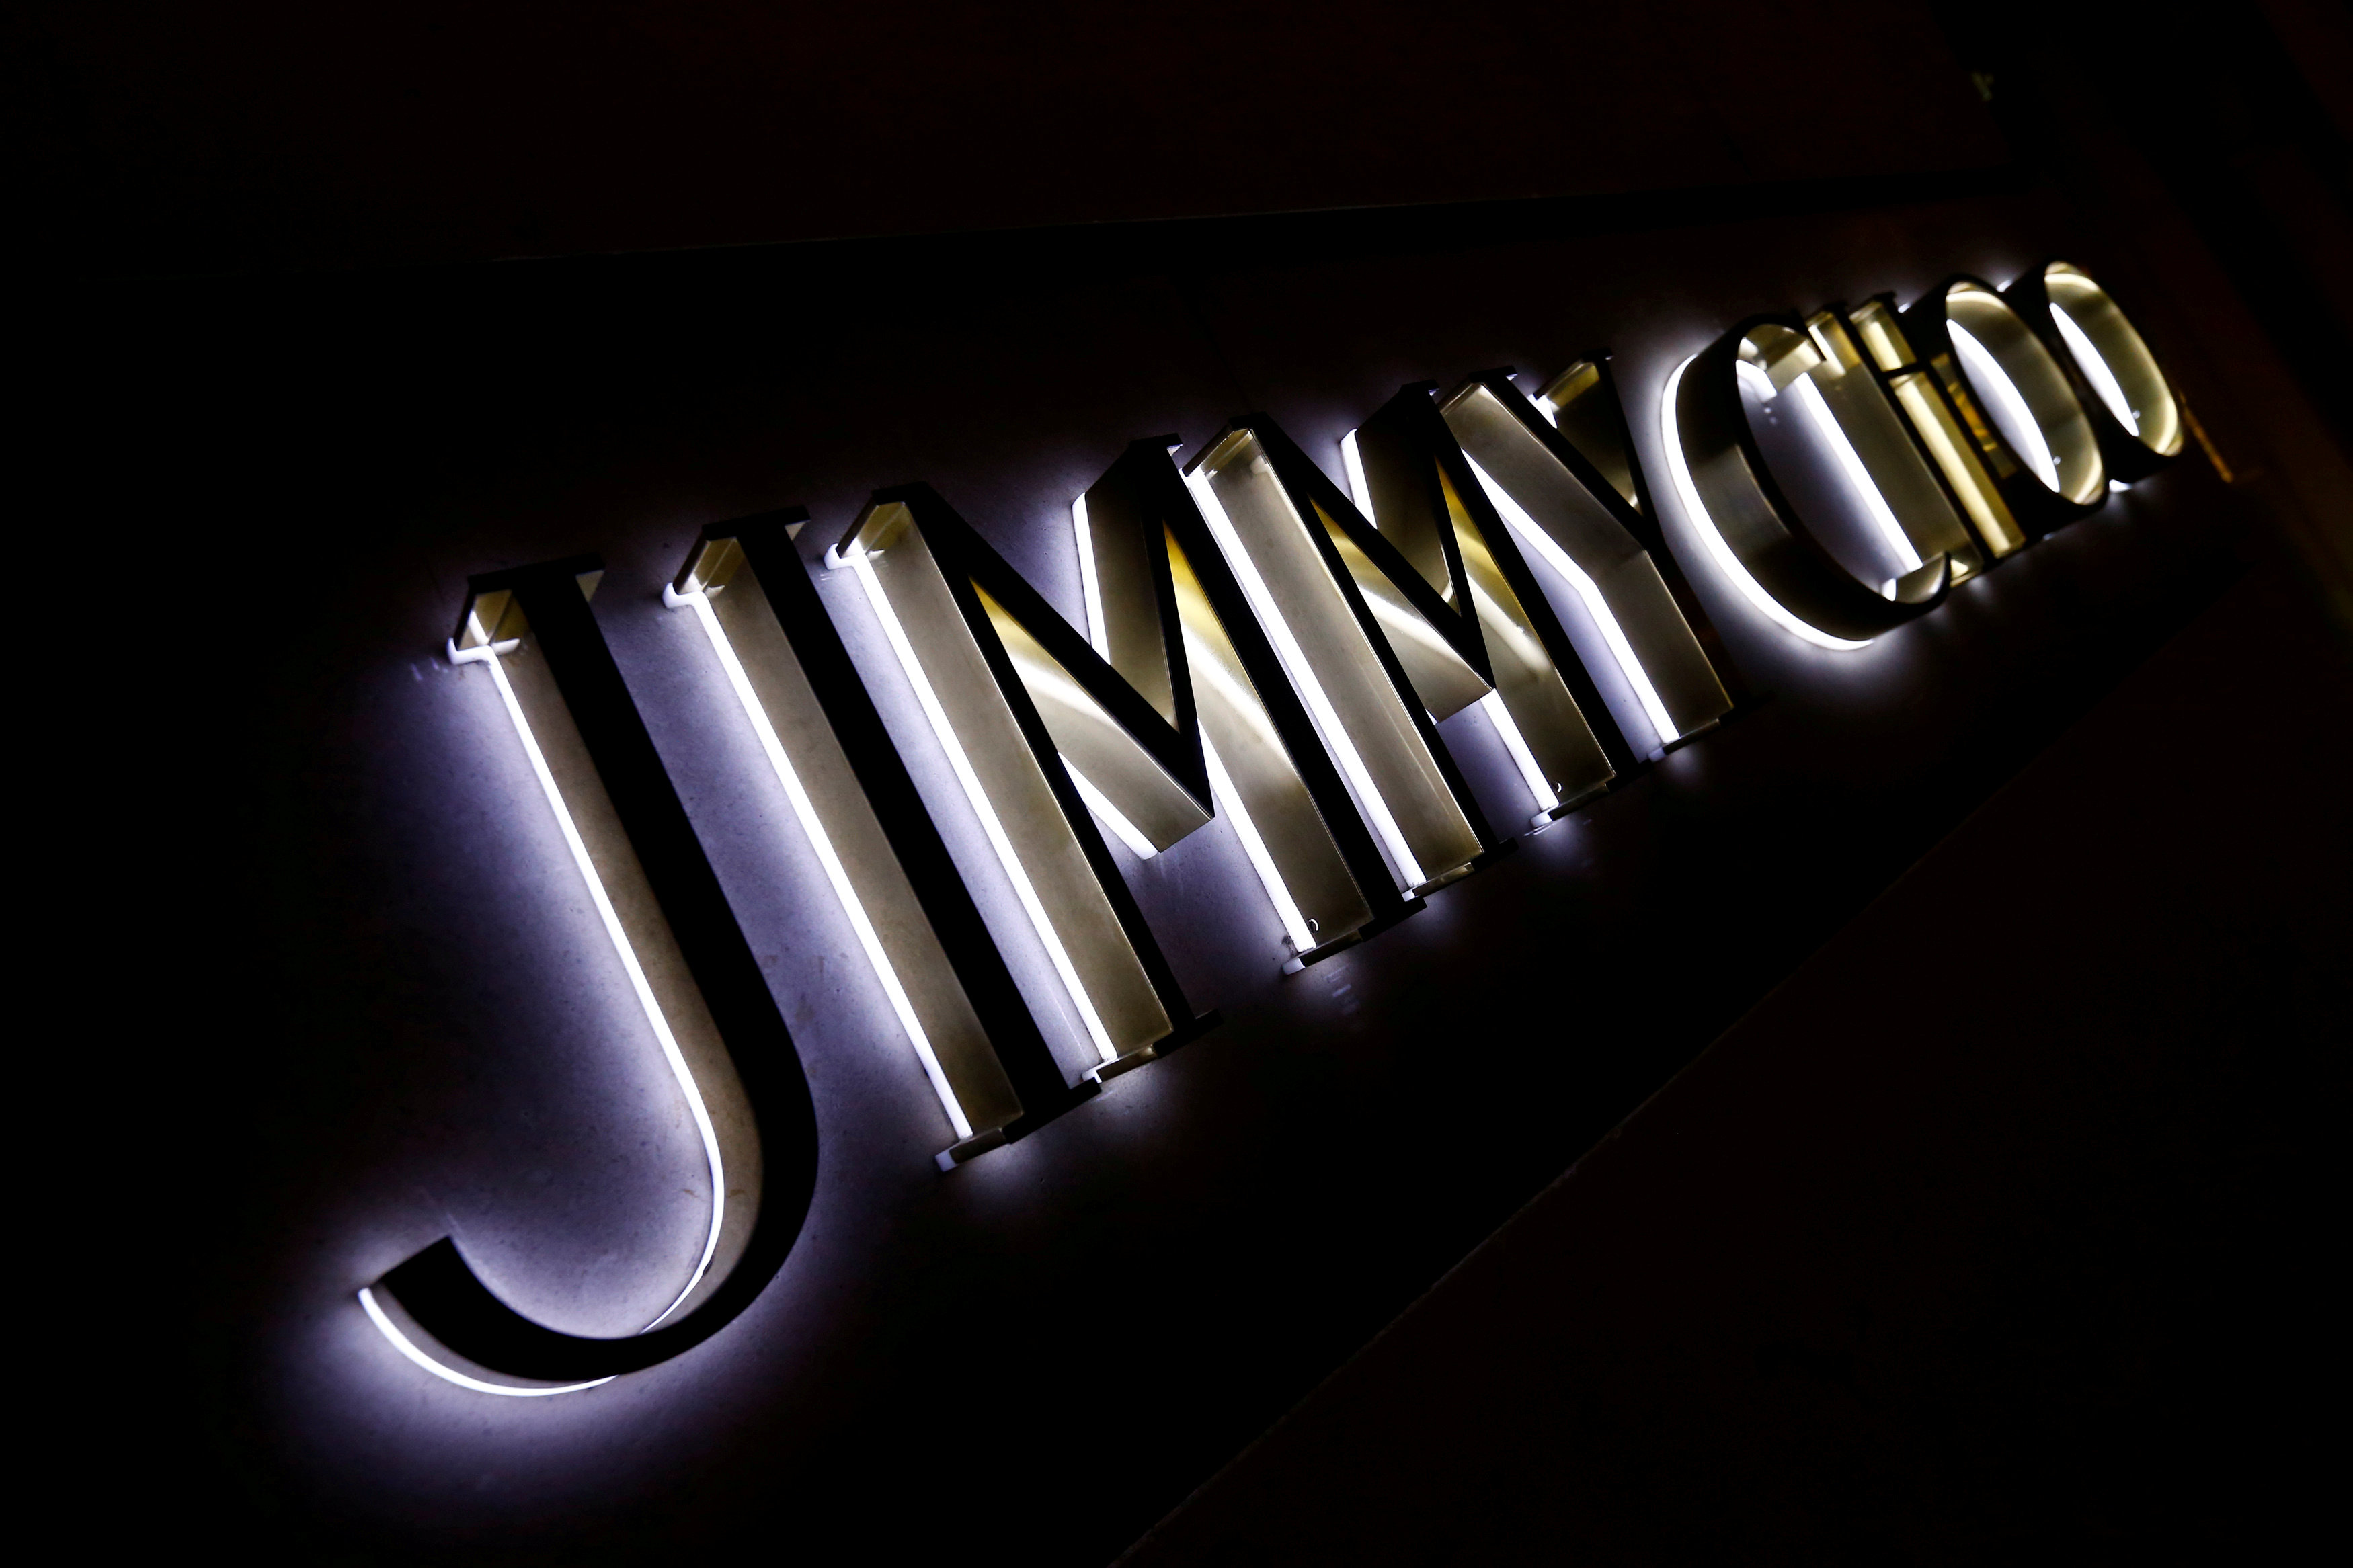 Jimmy Choo: Οικονομικές δυσκολίες οδηγούν σε αναζήτηση επενδυτή